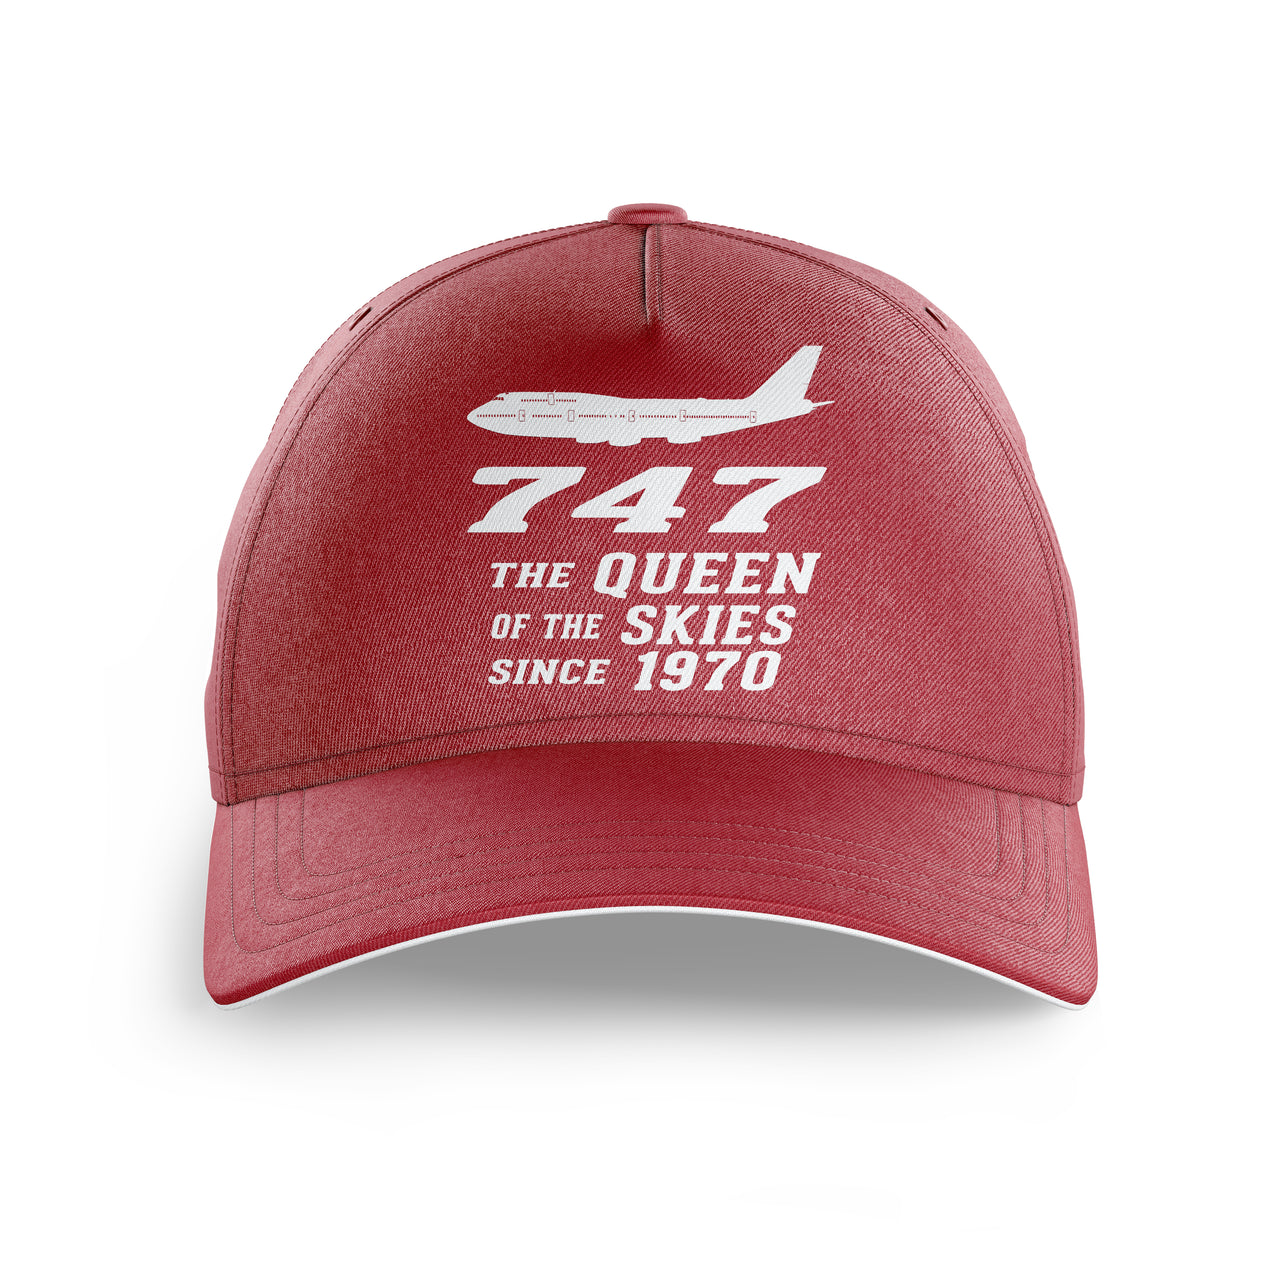 Boeing 747 - Queen of the Skies (2) Printed Hats